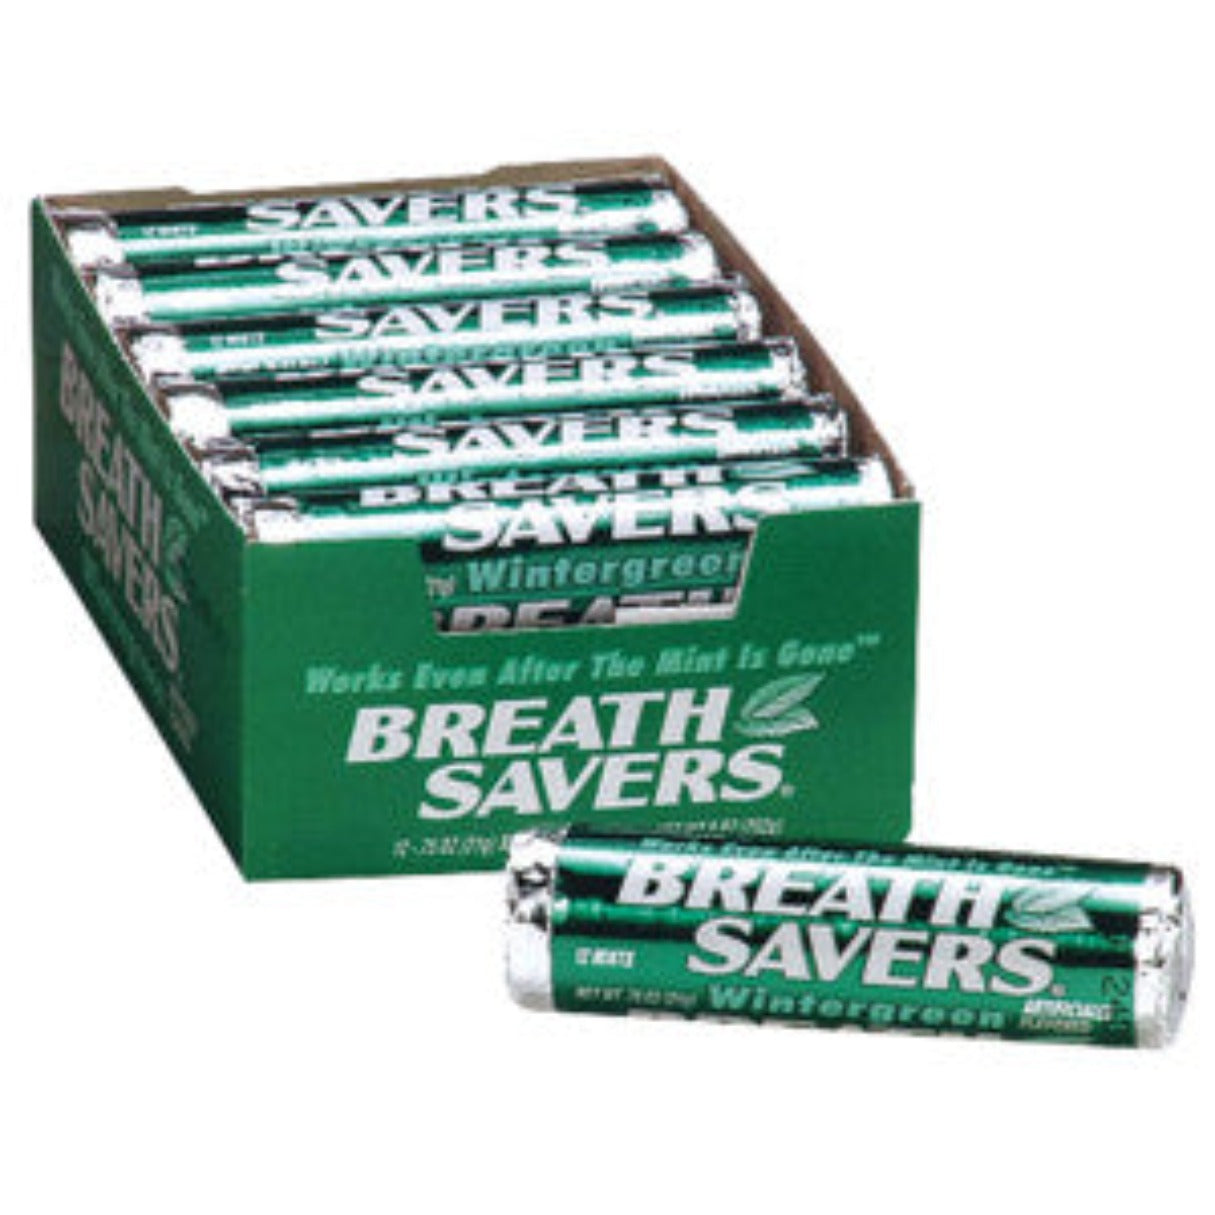 BreathSavers Mints Wintergreen - 24ct